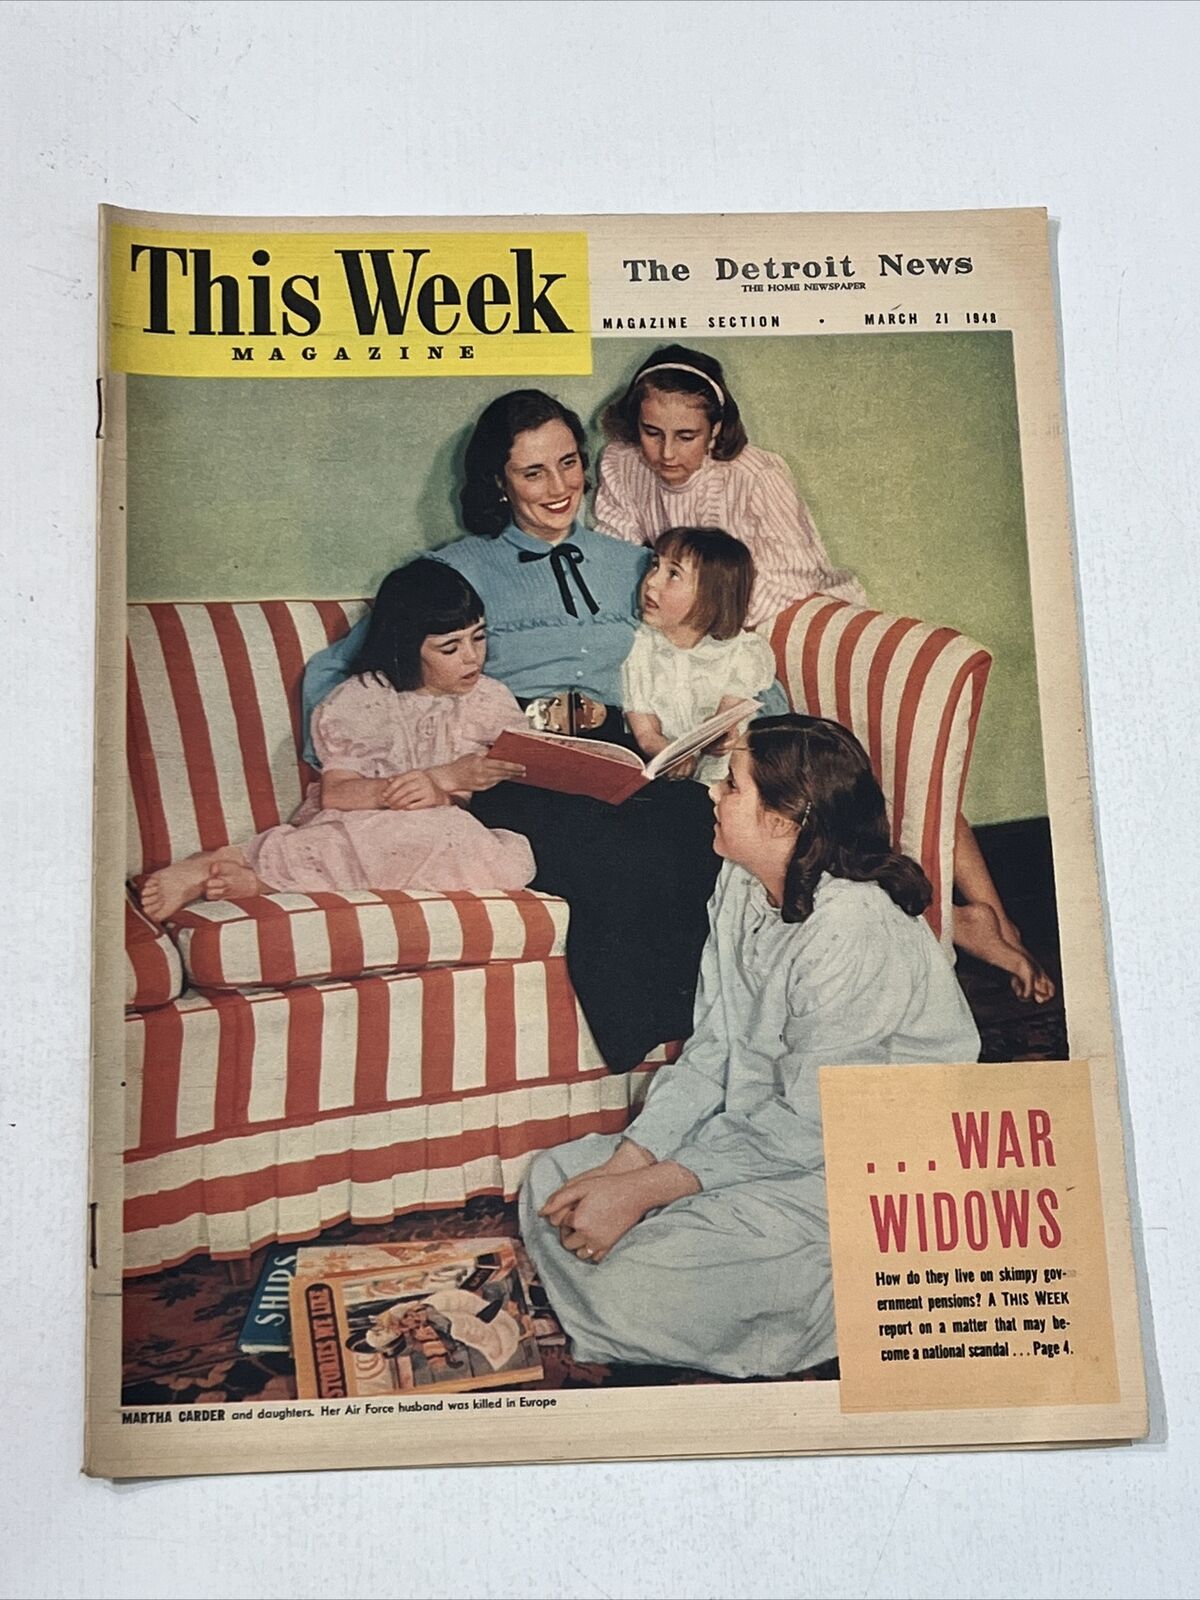 This Week Magazine The Detroit News March 21, 1948 War Widows